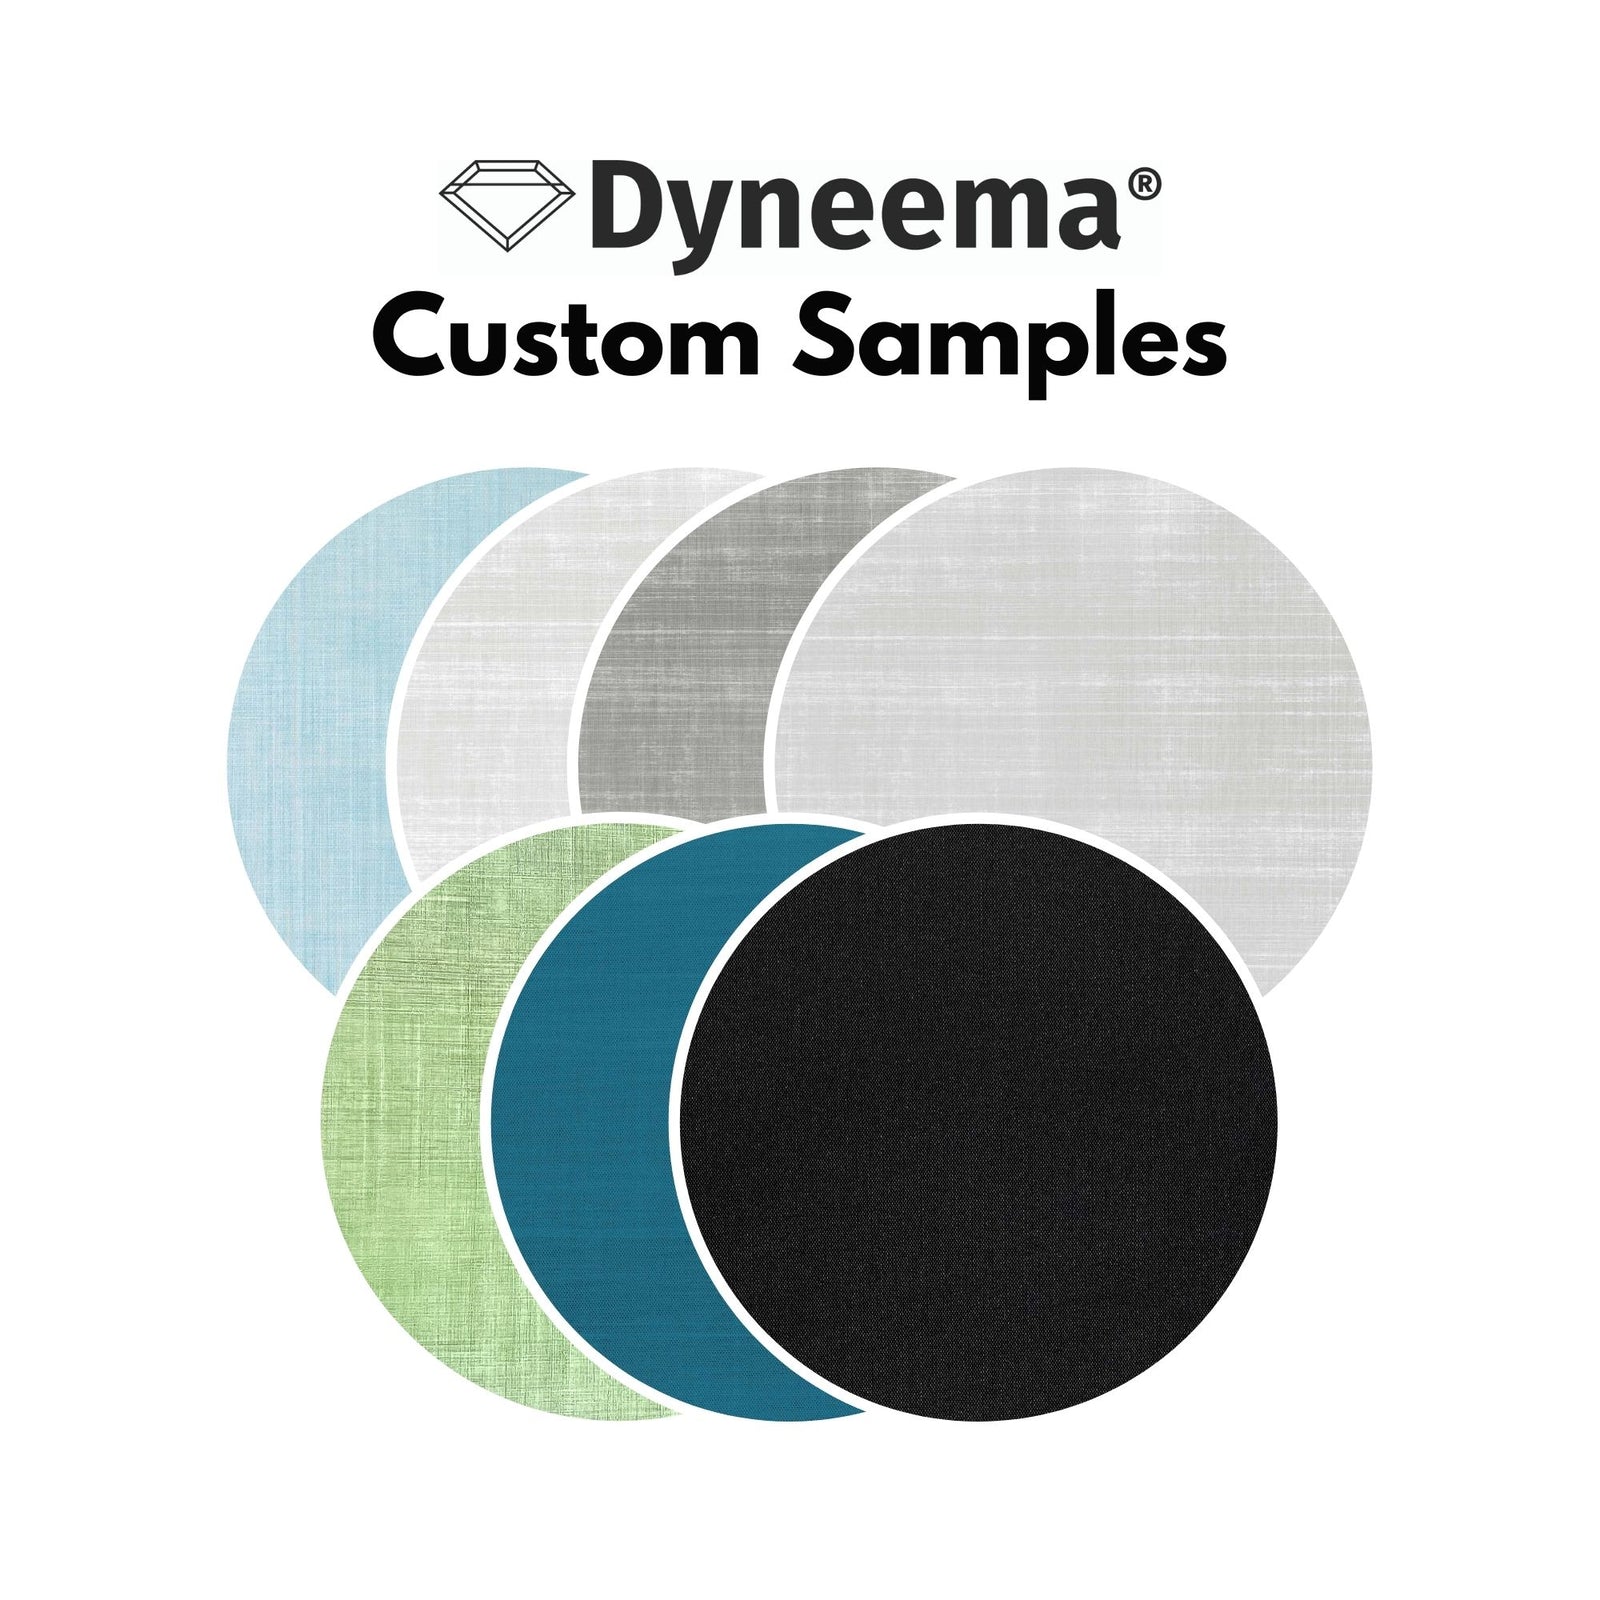 Dyneema® Composite Fabric Sample Pack